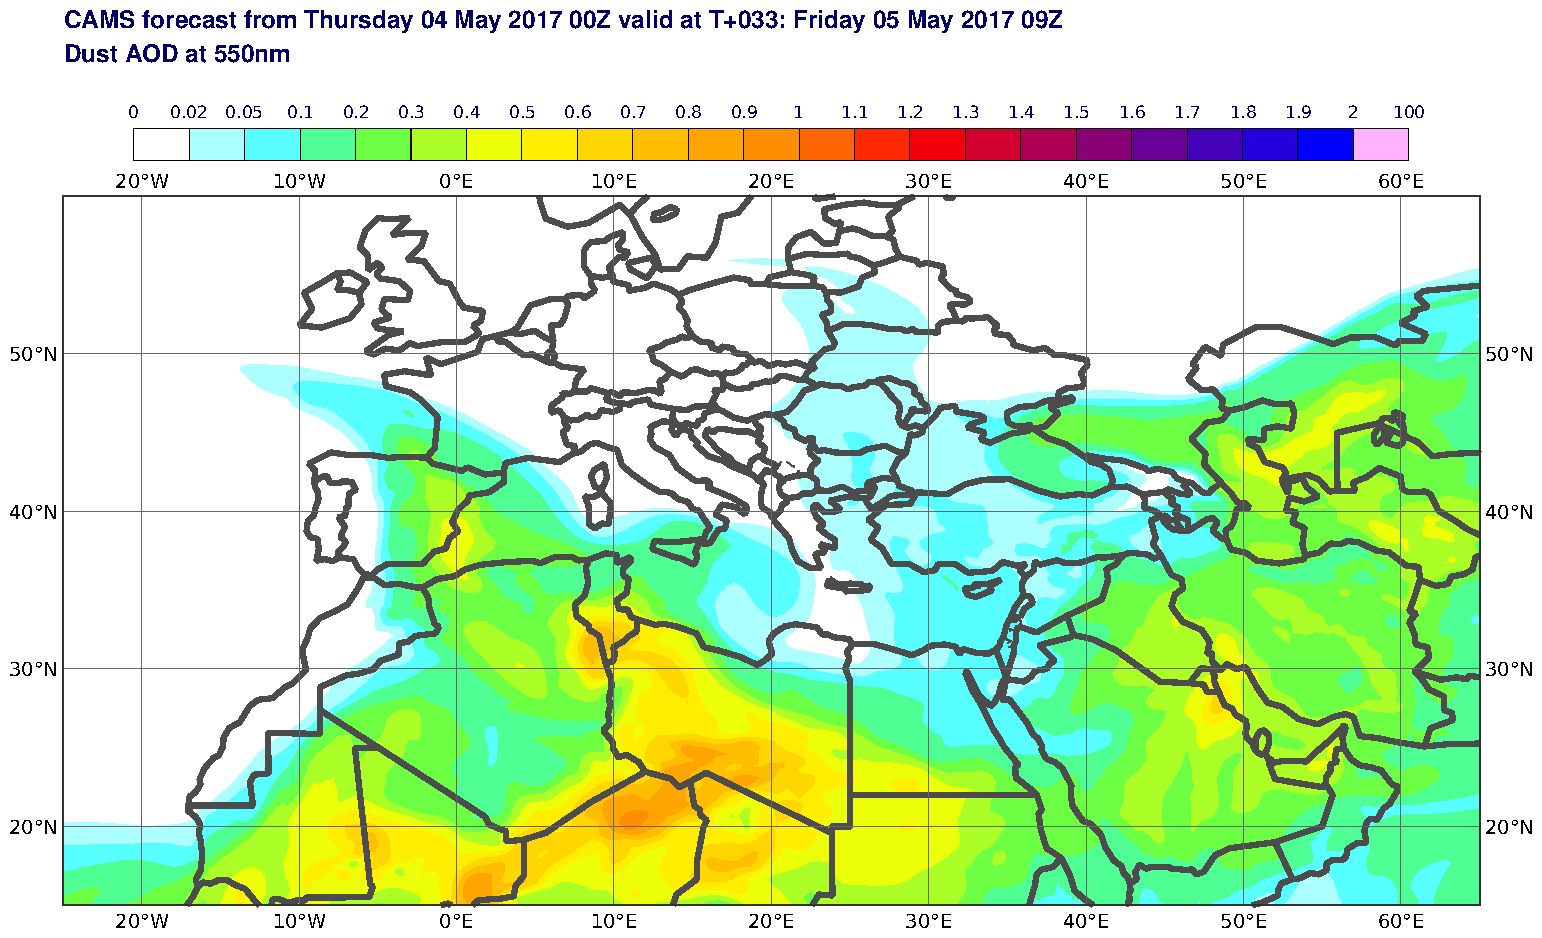 Dust AOD at 550nm valid at T33 - 2017-05-05 09:00